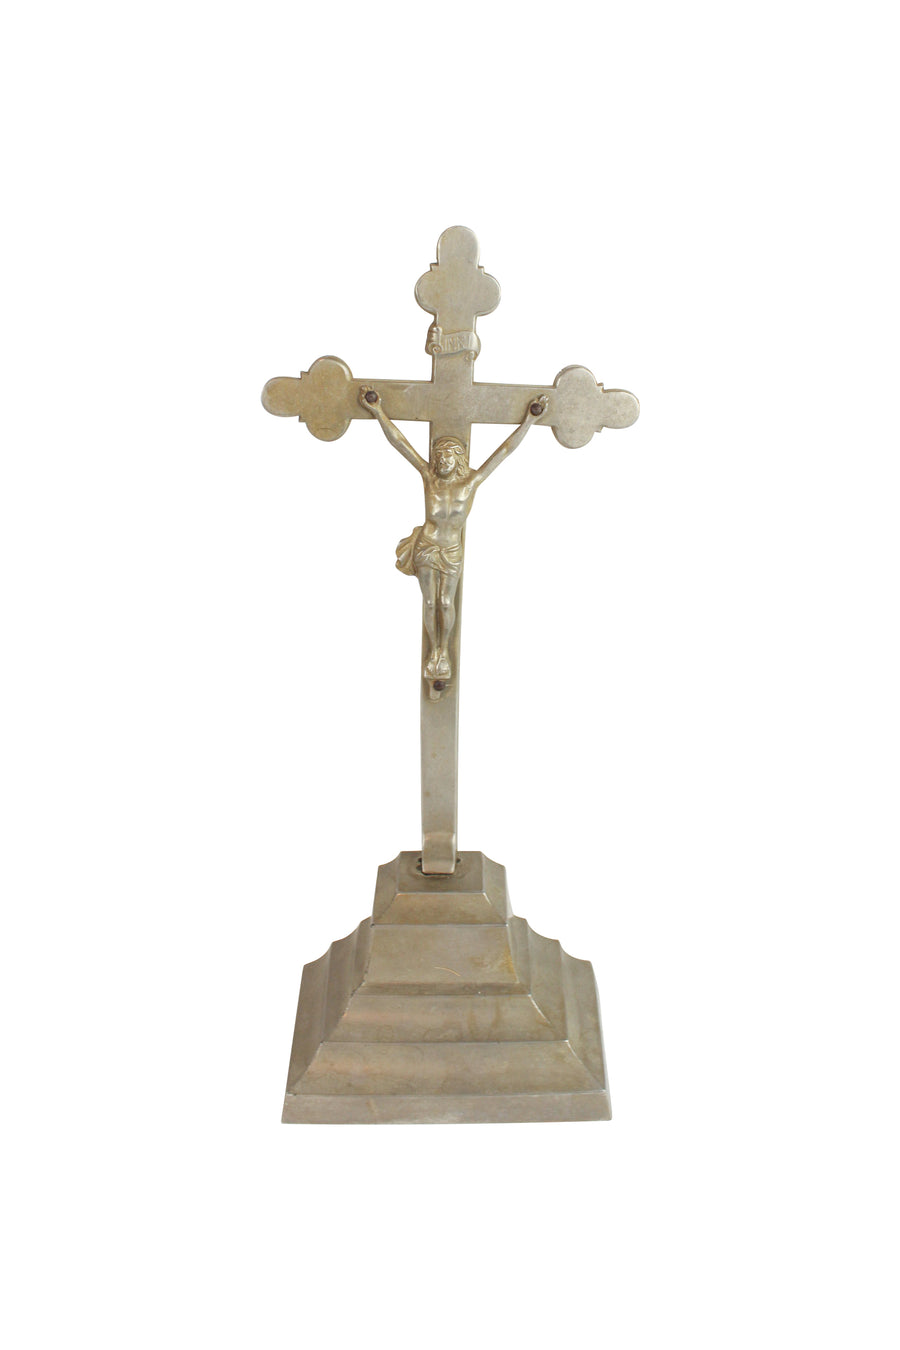 Pewter Crucifix